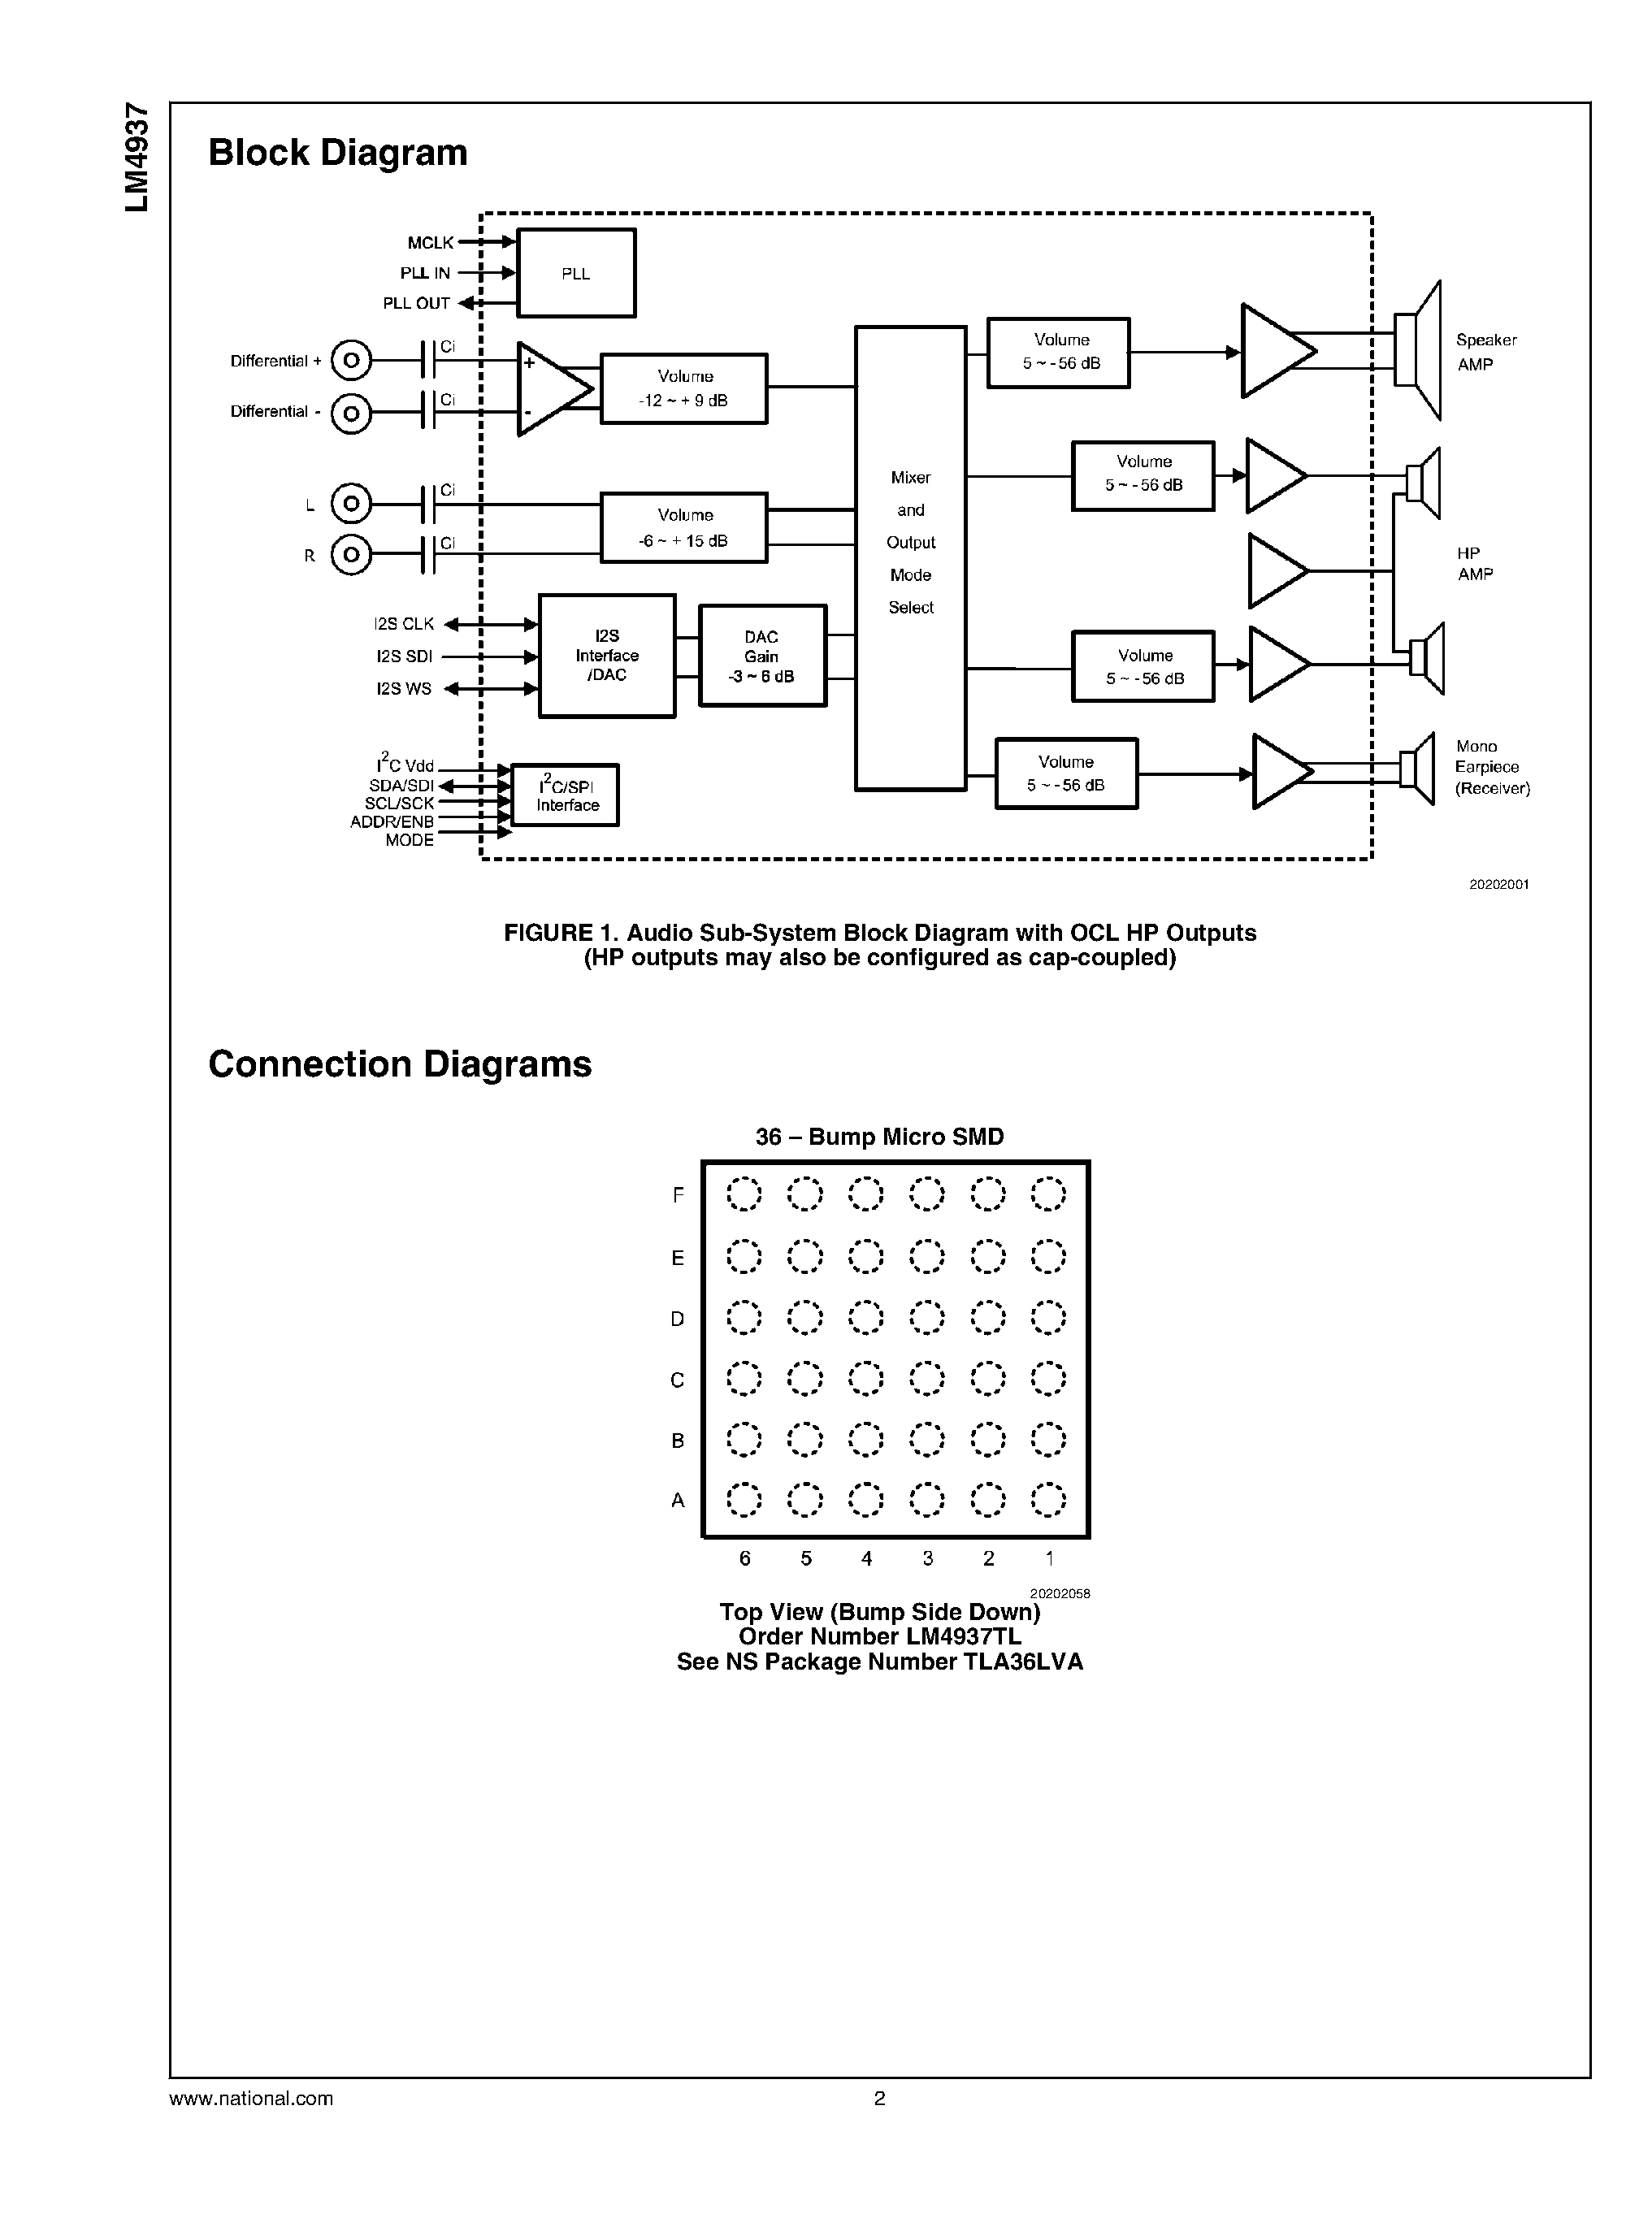 Datasheet LM4937 - Audio Sub-System page 2